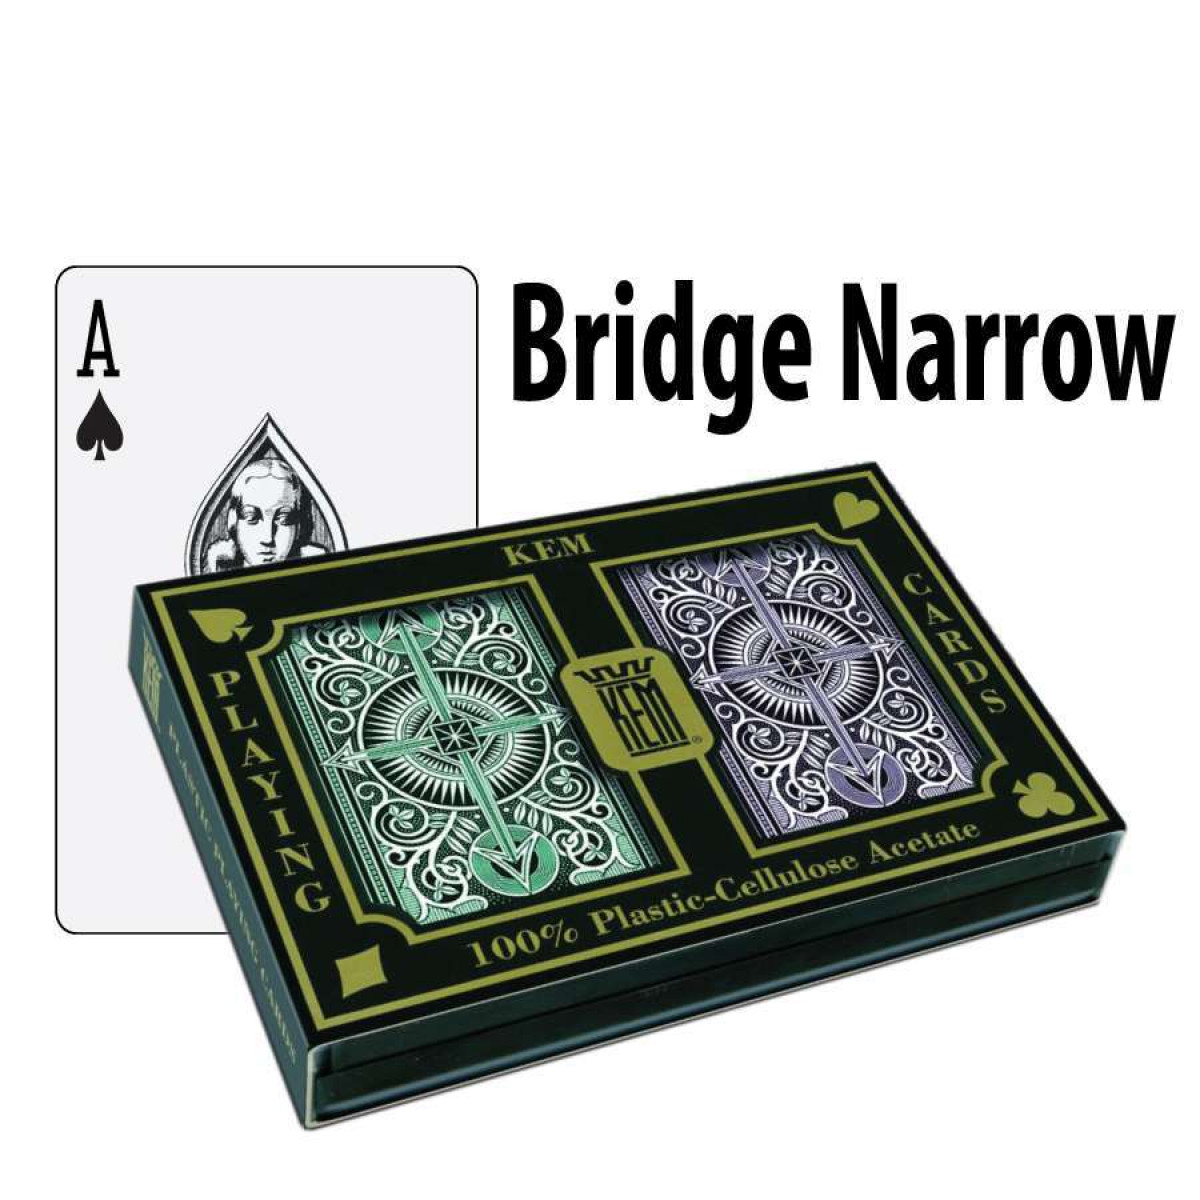 Set of KEM Arrow Green/Brown Bridge Size Regular Index Plastic Playing Cards 